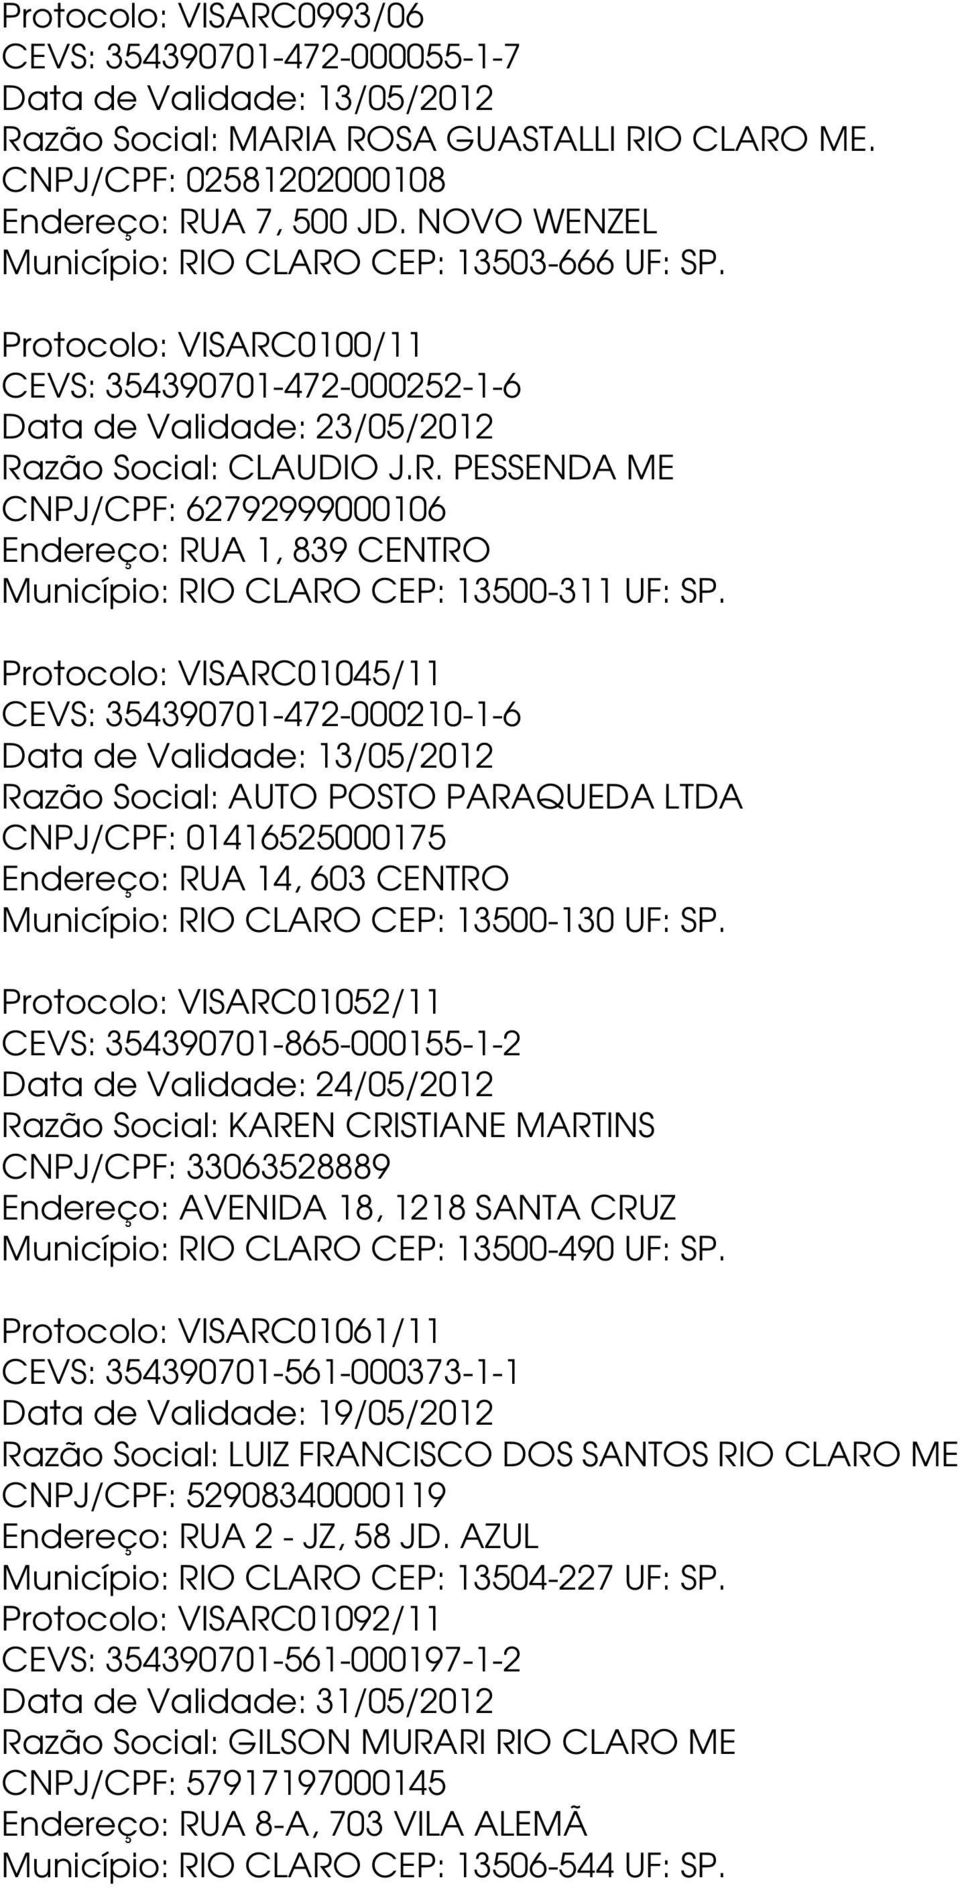 Protocolo: VISARC01045/11 CEVS: 354390701-472-000210-1-6 Data de Validade: 13/05/2012 Razão Social: AUTO POSTO PARAQUEDA LTDA CNPJ/CPF: 01416525000175 Endereço: RUA 14, 603 CENTRO Município: RIO